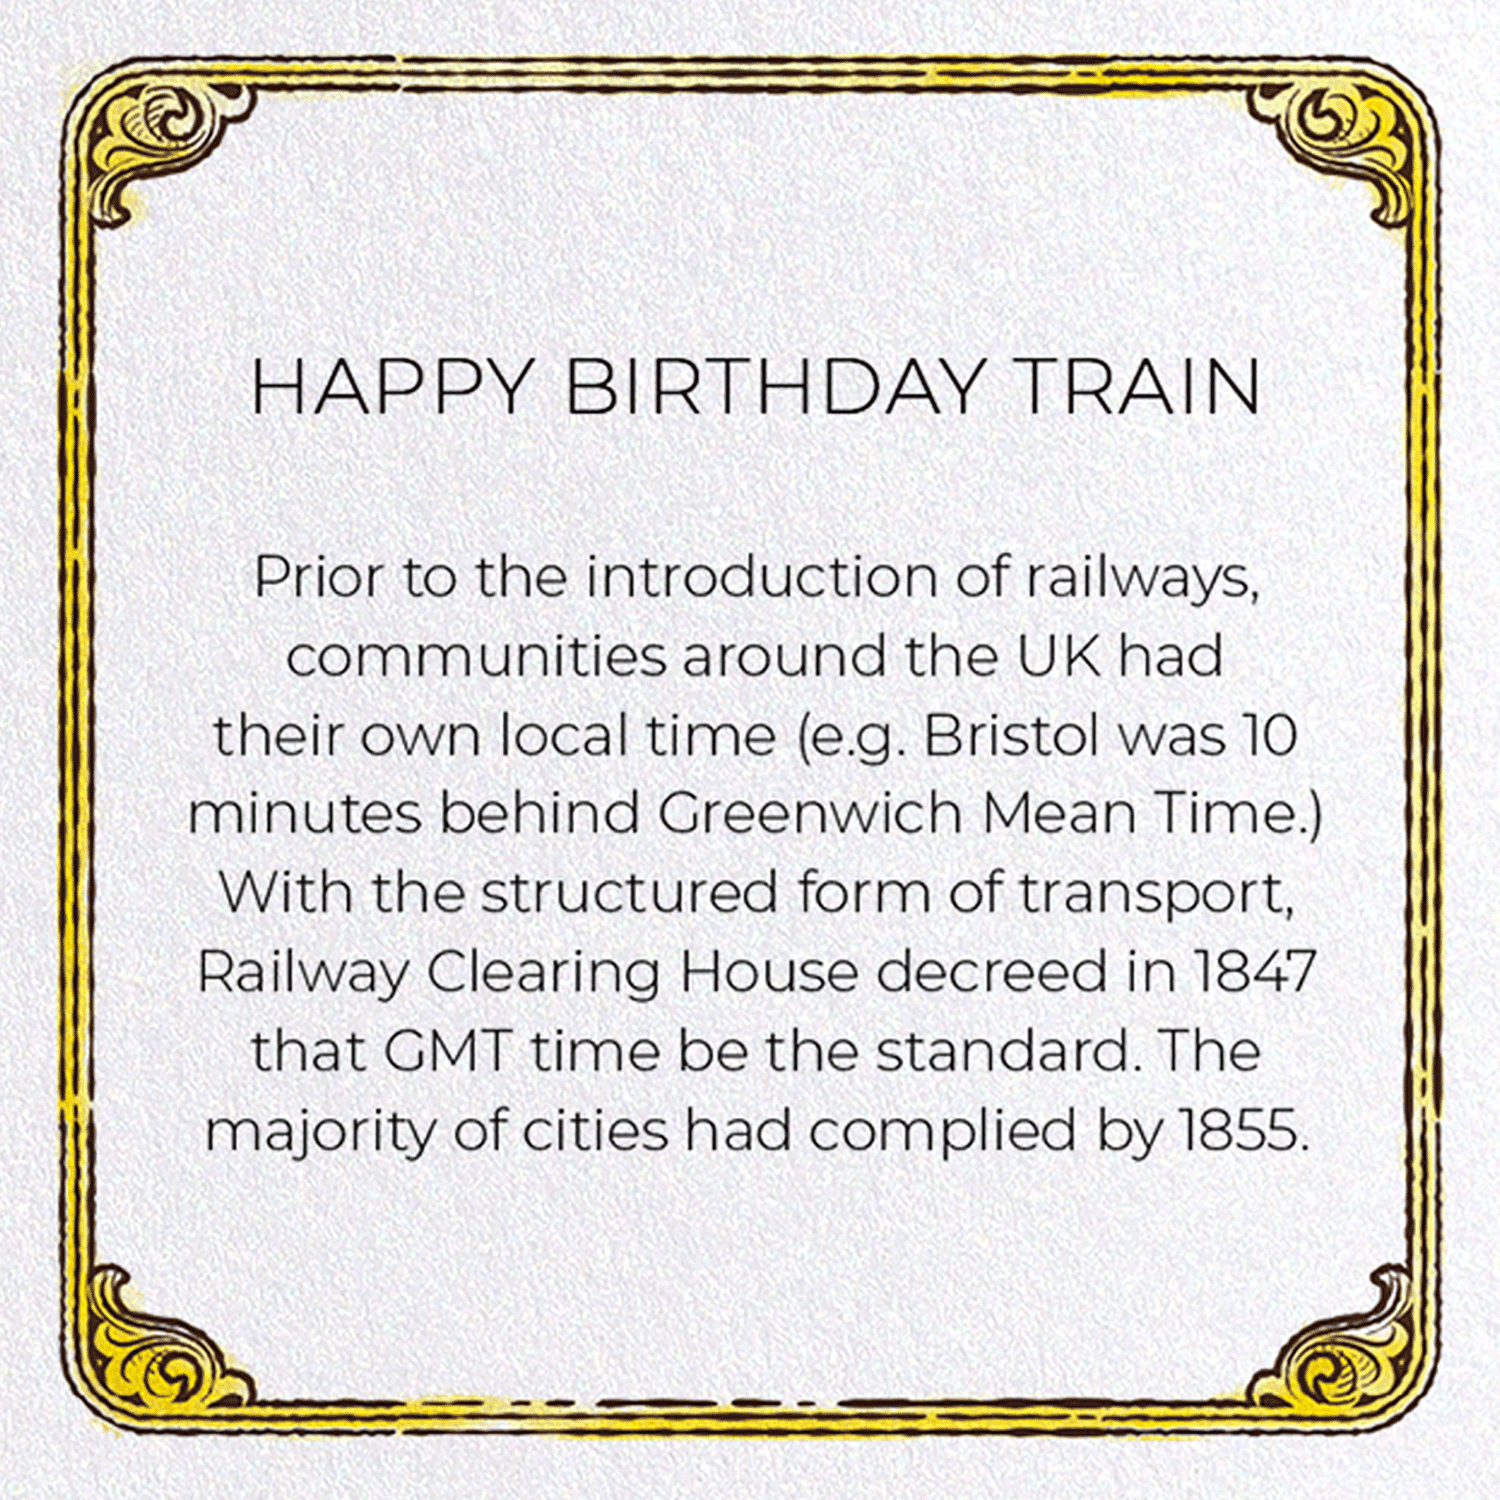 HAPPY BIRTHDAY TRAIN: Victorian Greeting Card